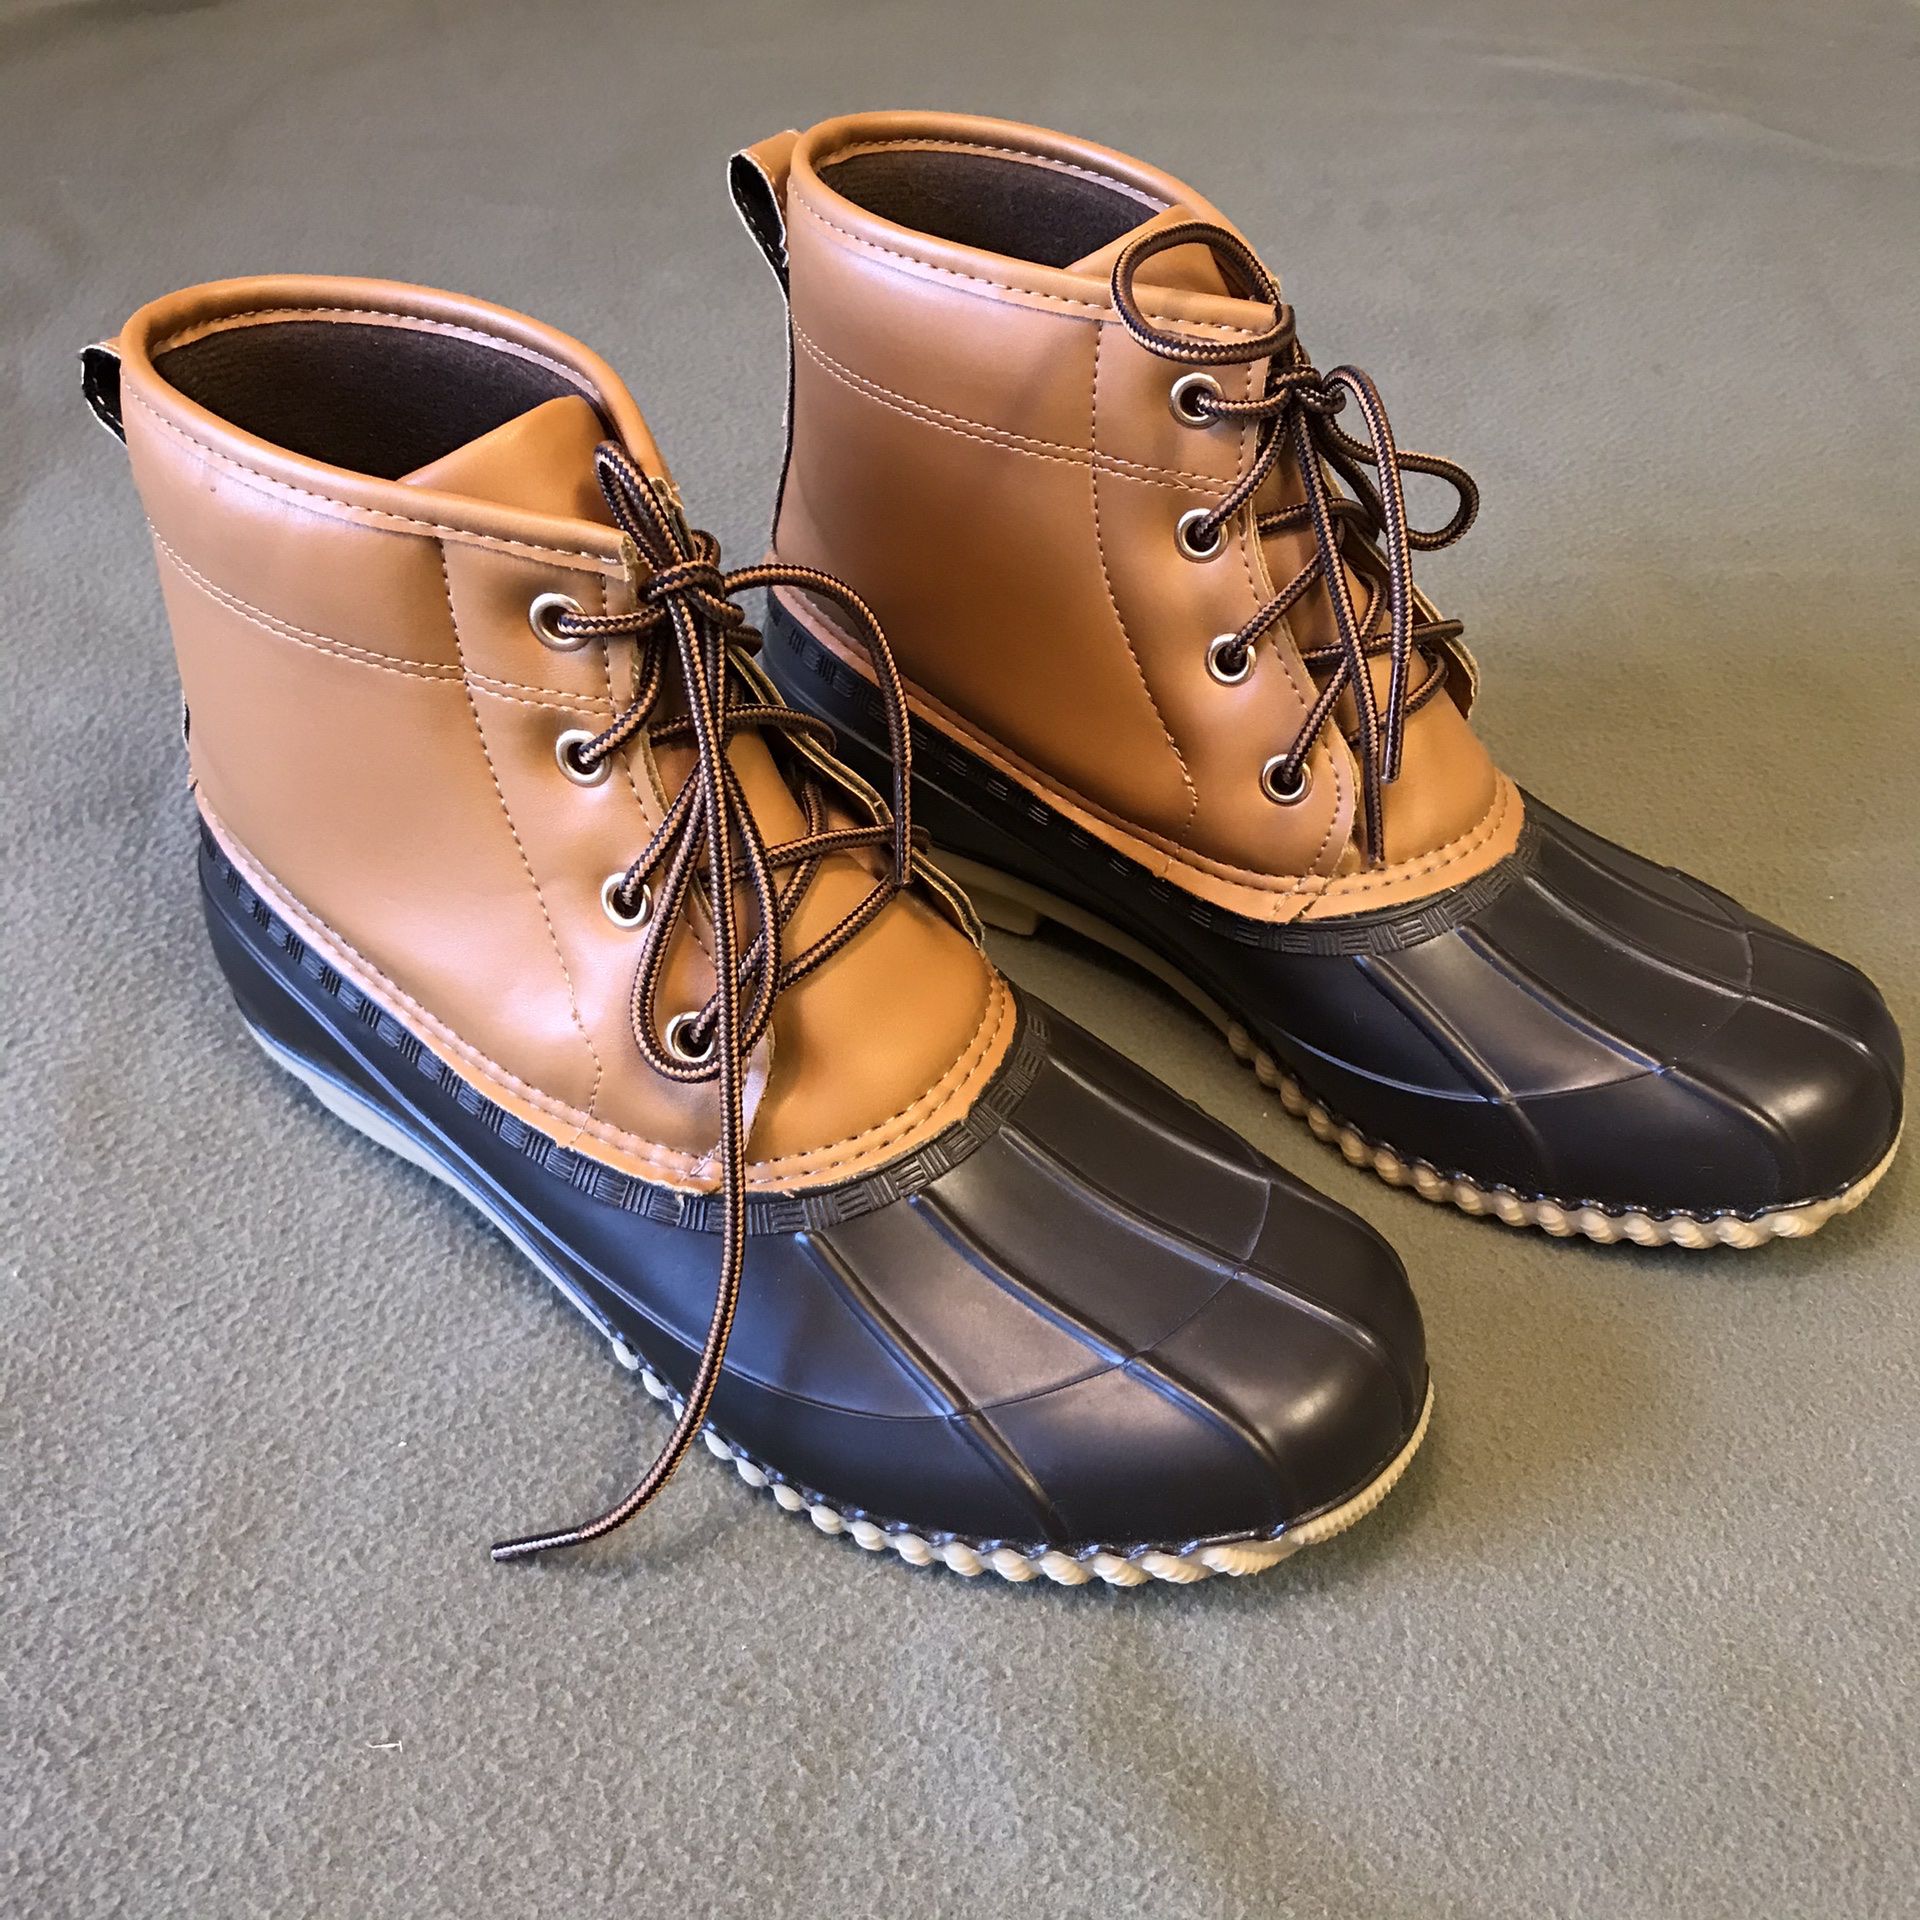 Brown/Beige Rain Boots For Women